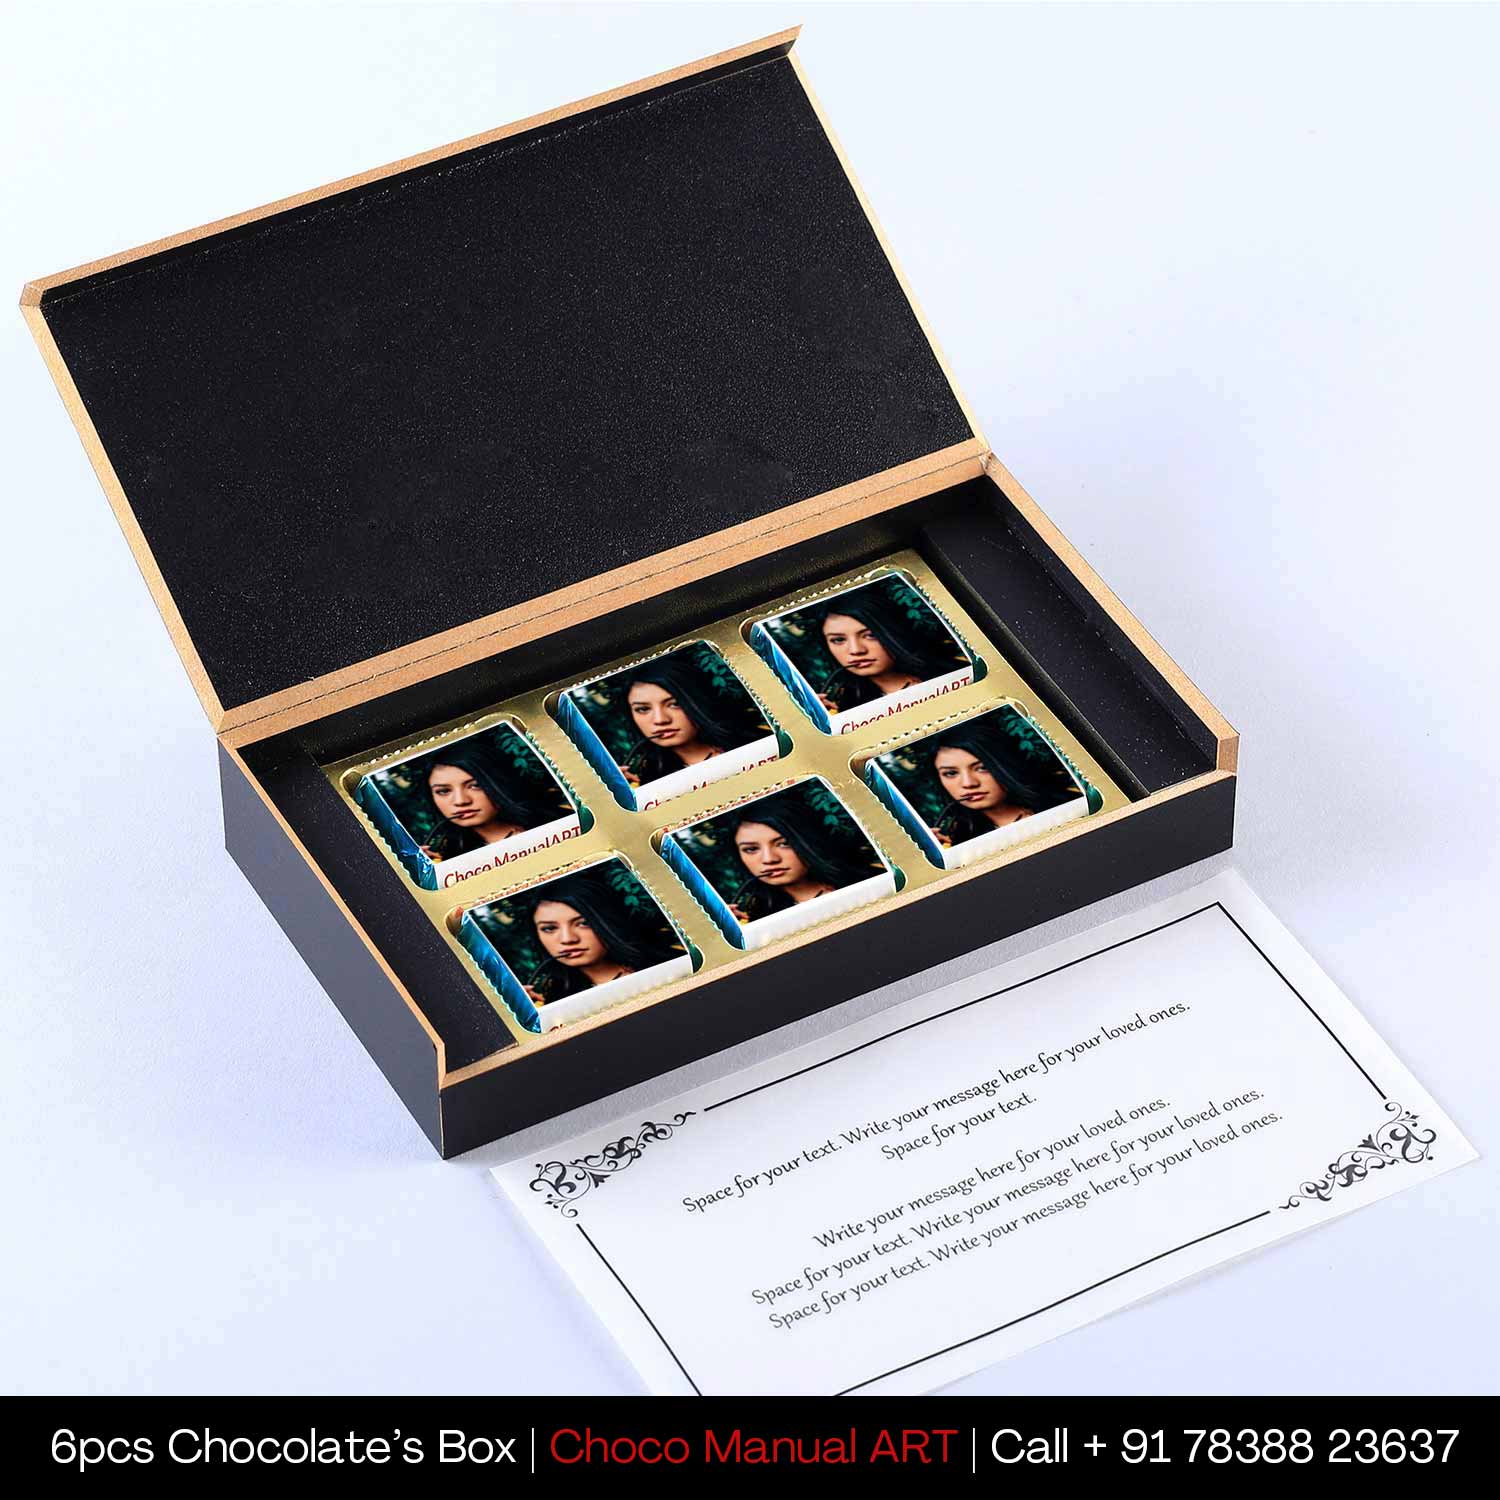 Customized Chocolate box with Wrapper chocolates